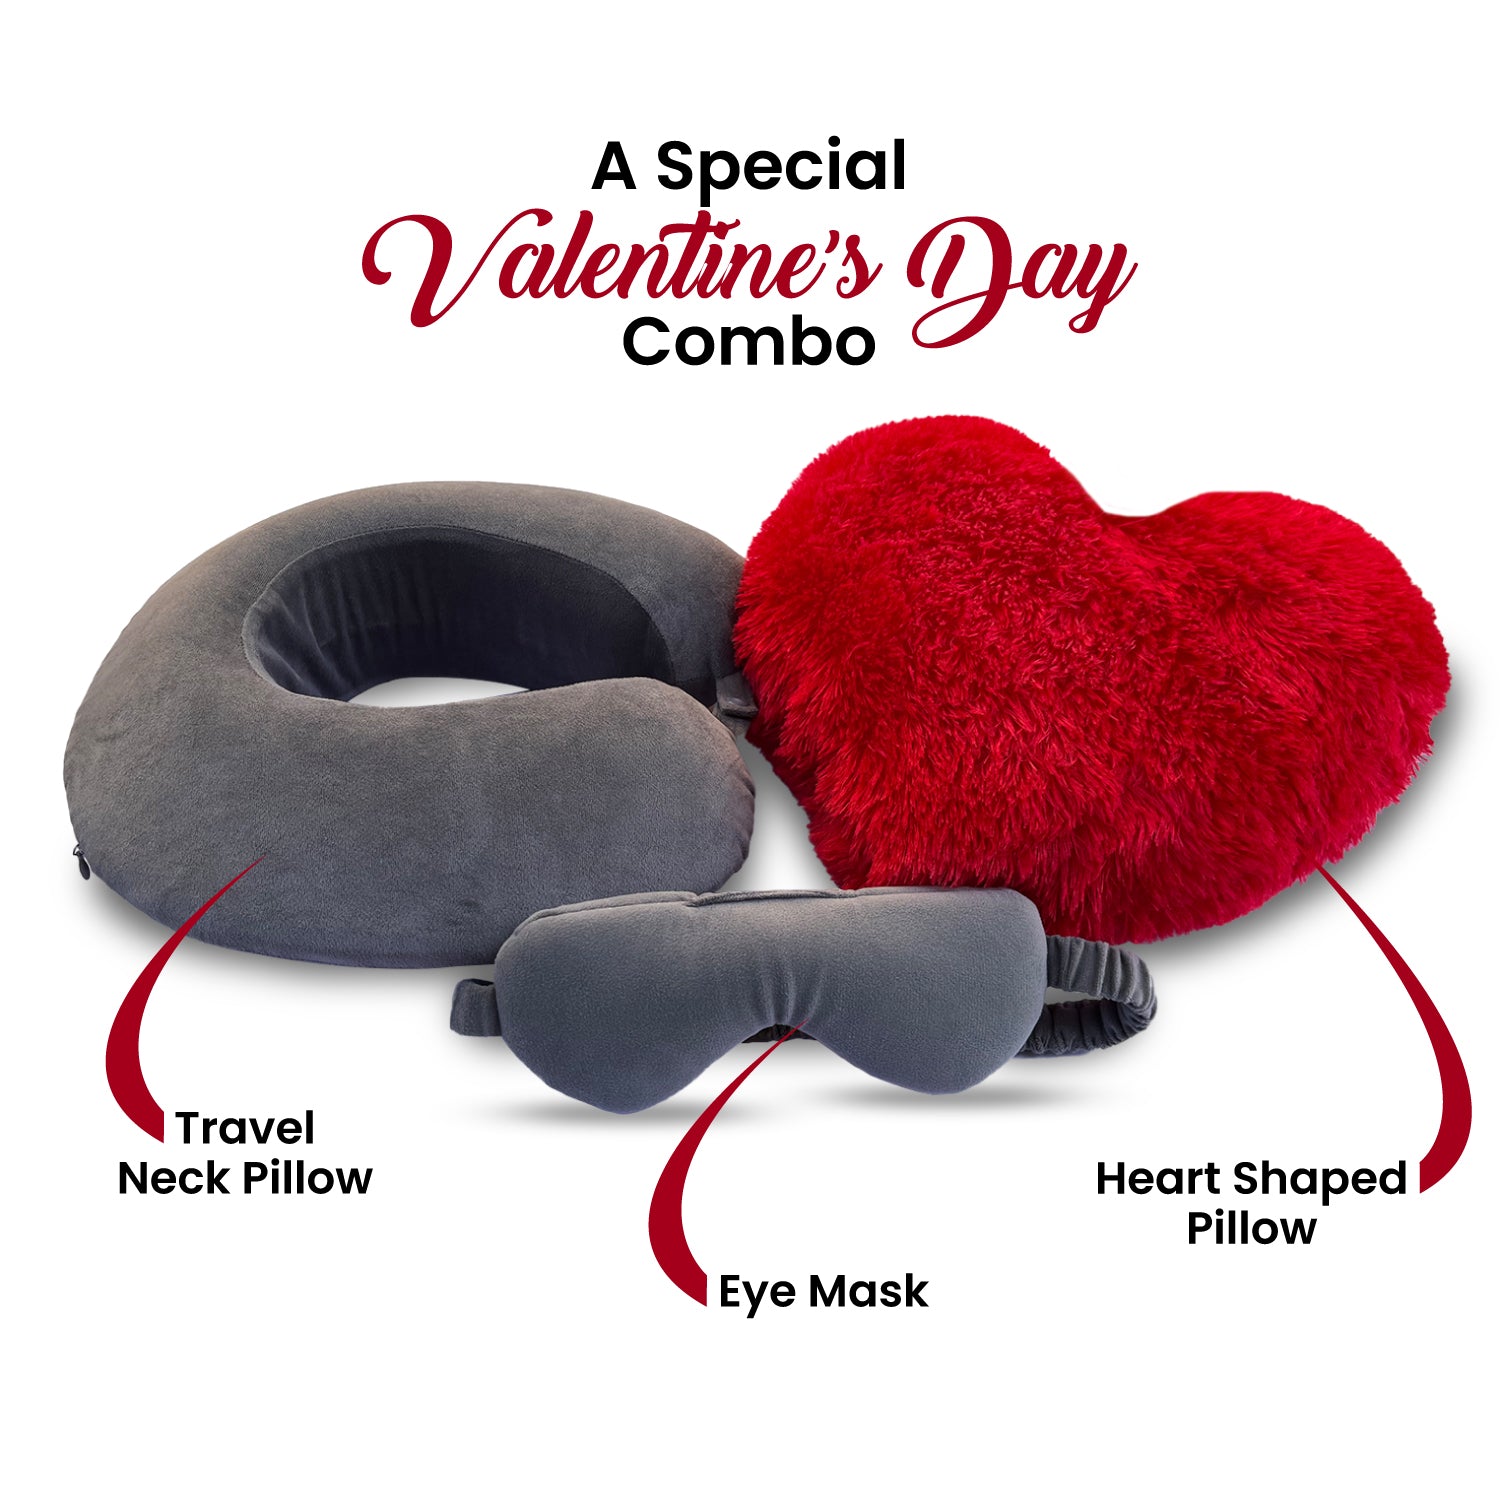 Heart Shape Pillow, Eye Mask & Travel Neck Pillow Combo